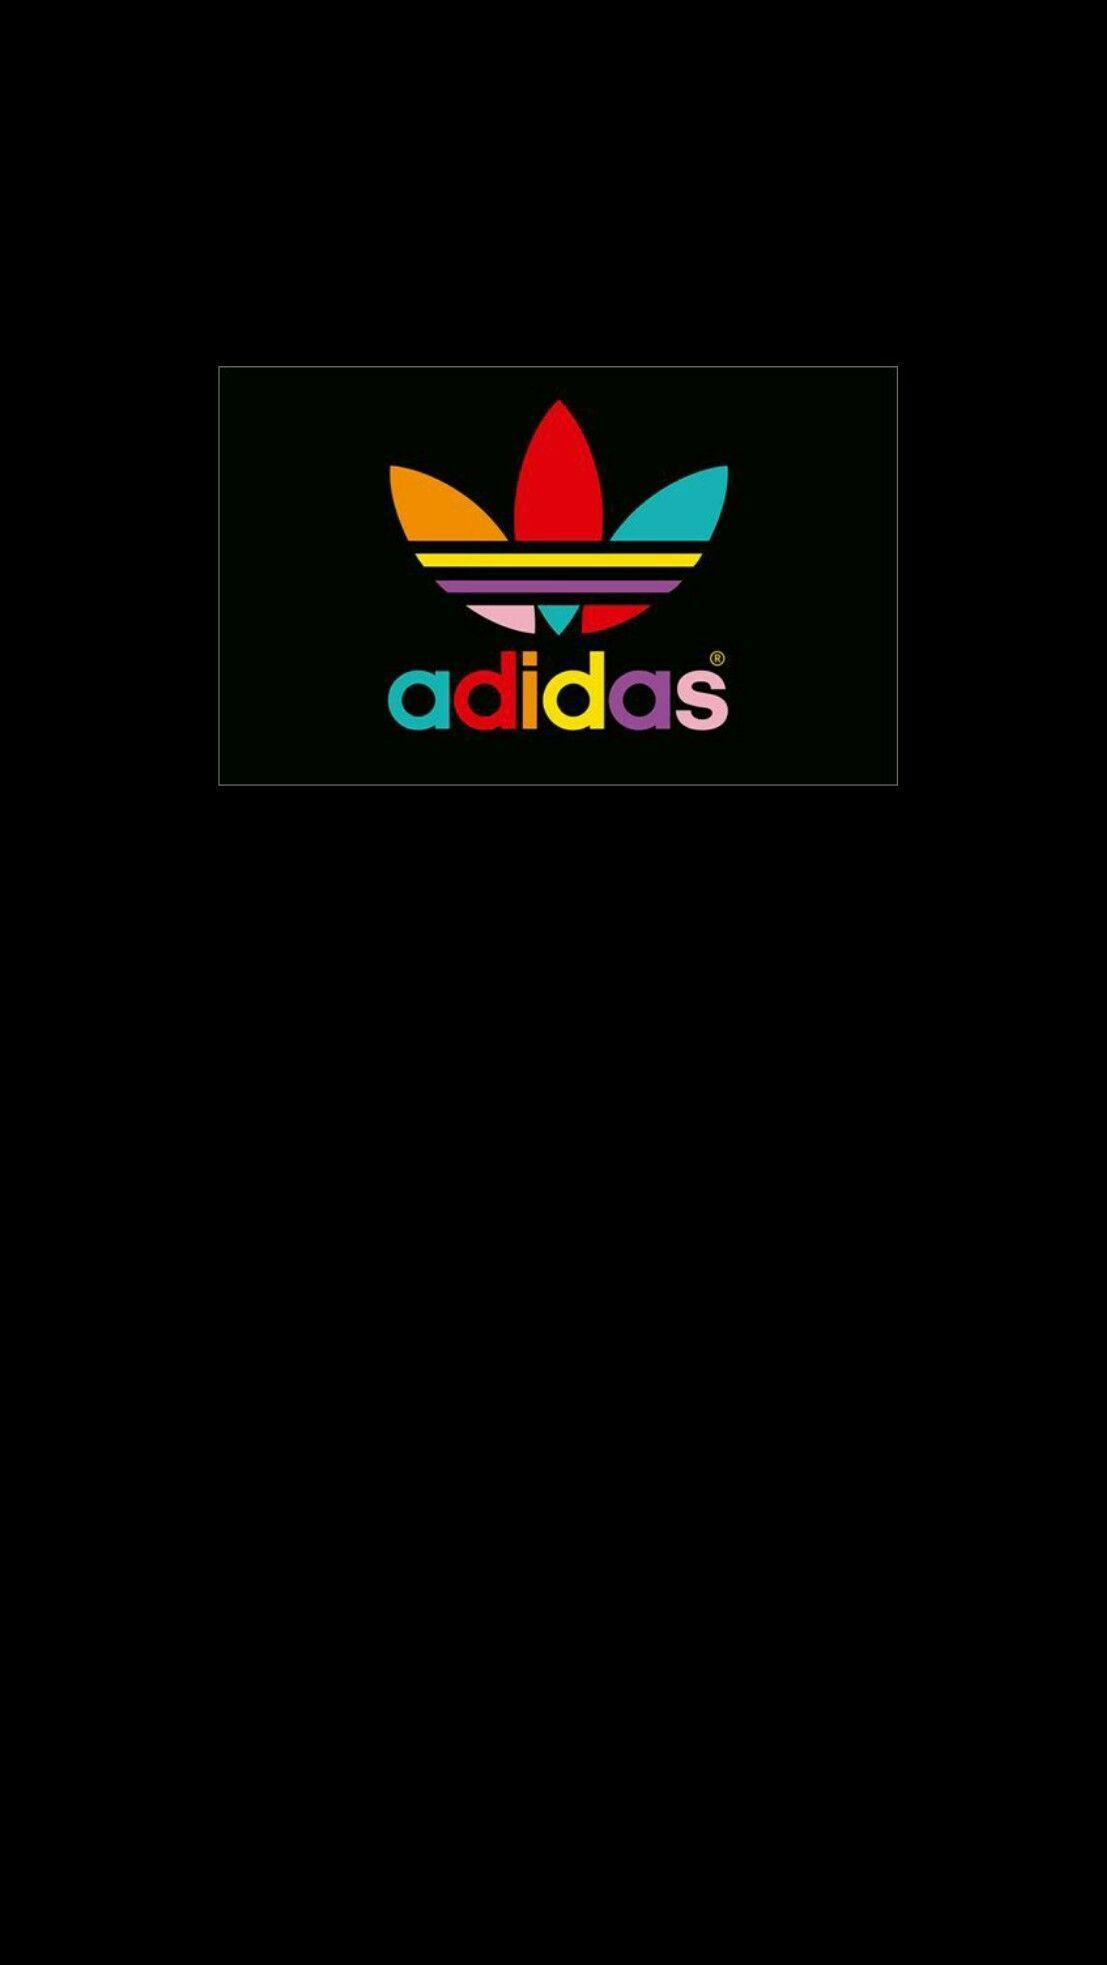 Sick Adidas Logo - adidas #camouflage #wallpaper #iPhone #android | wallpaper ...